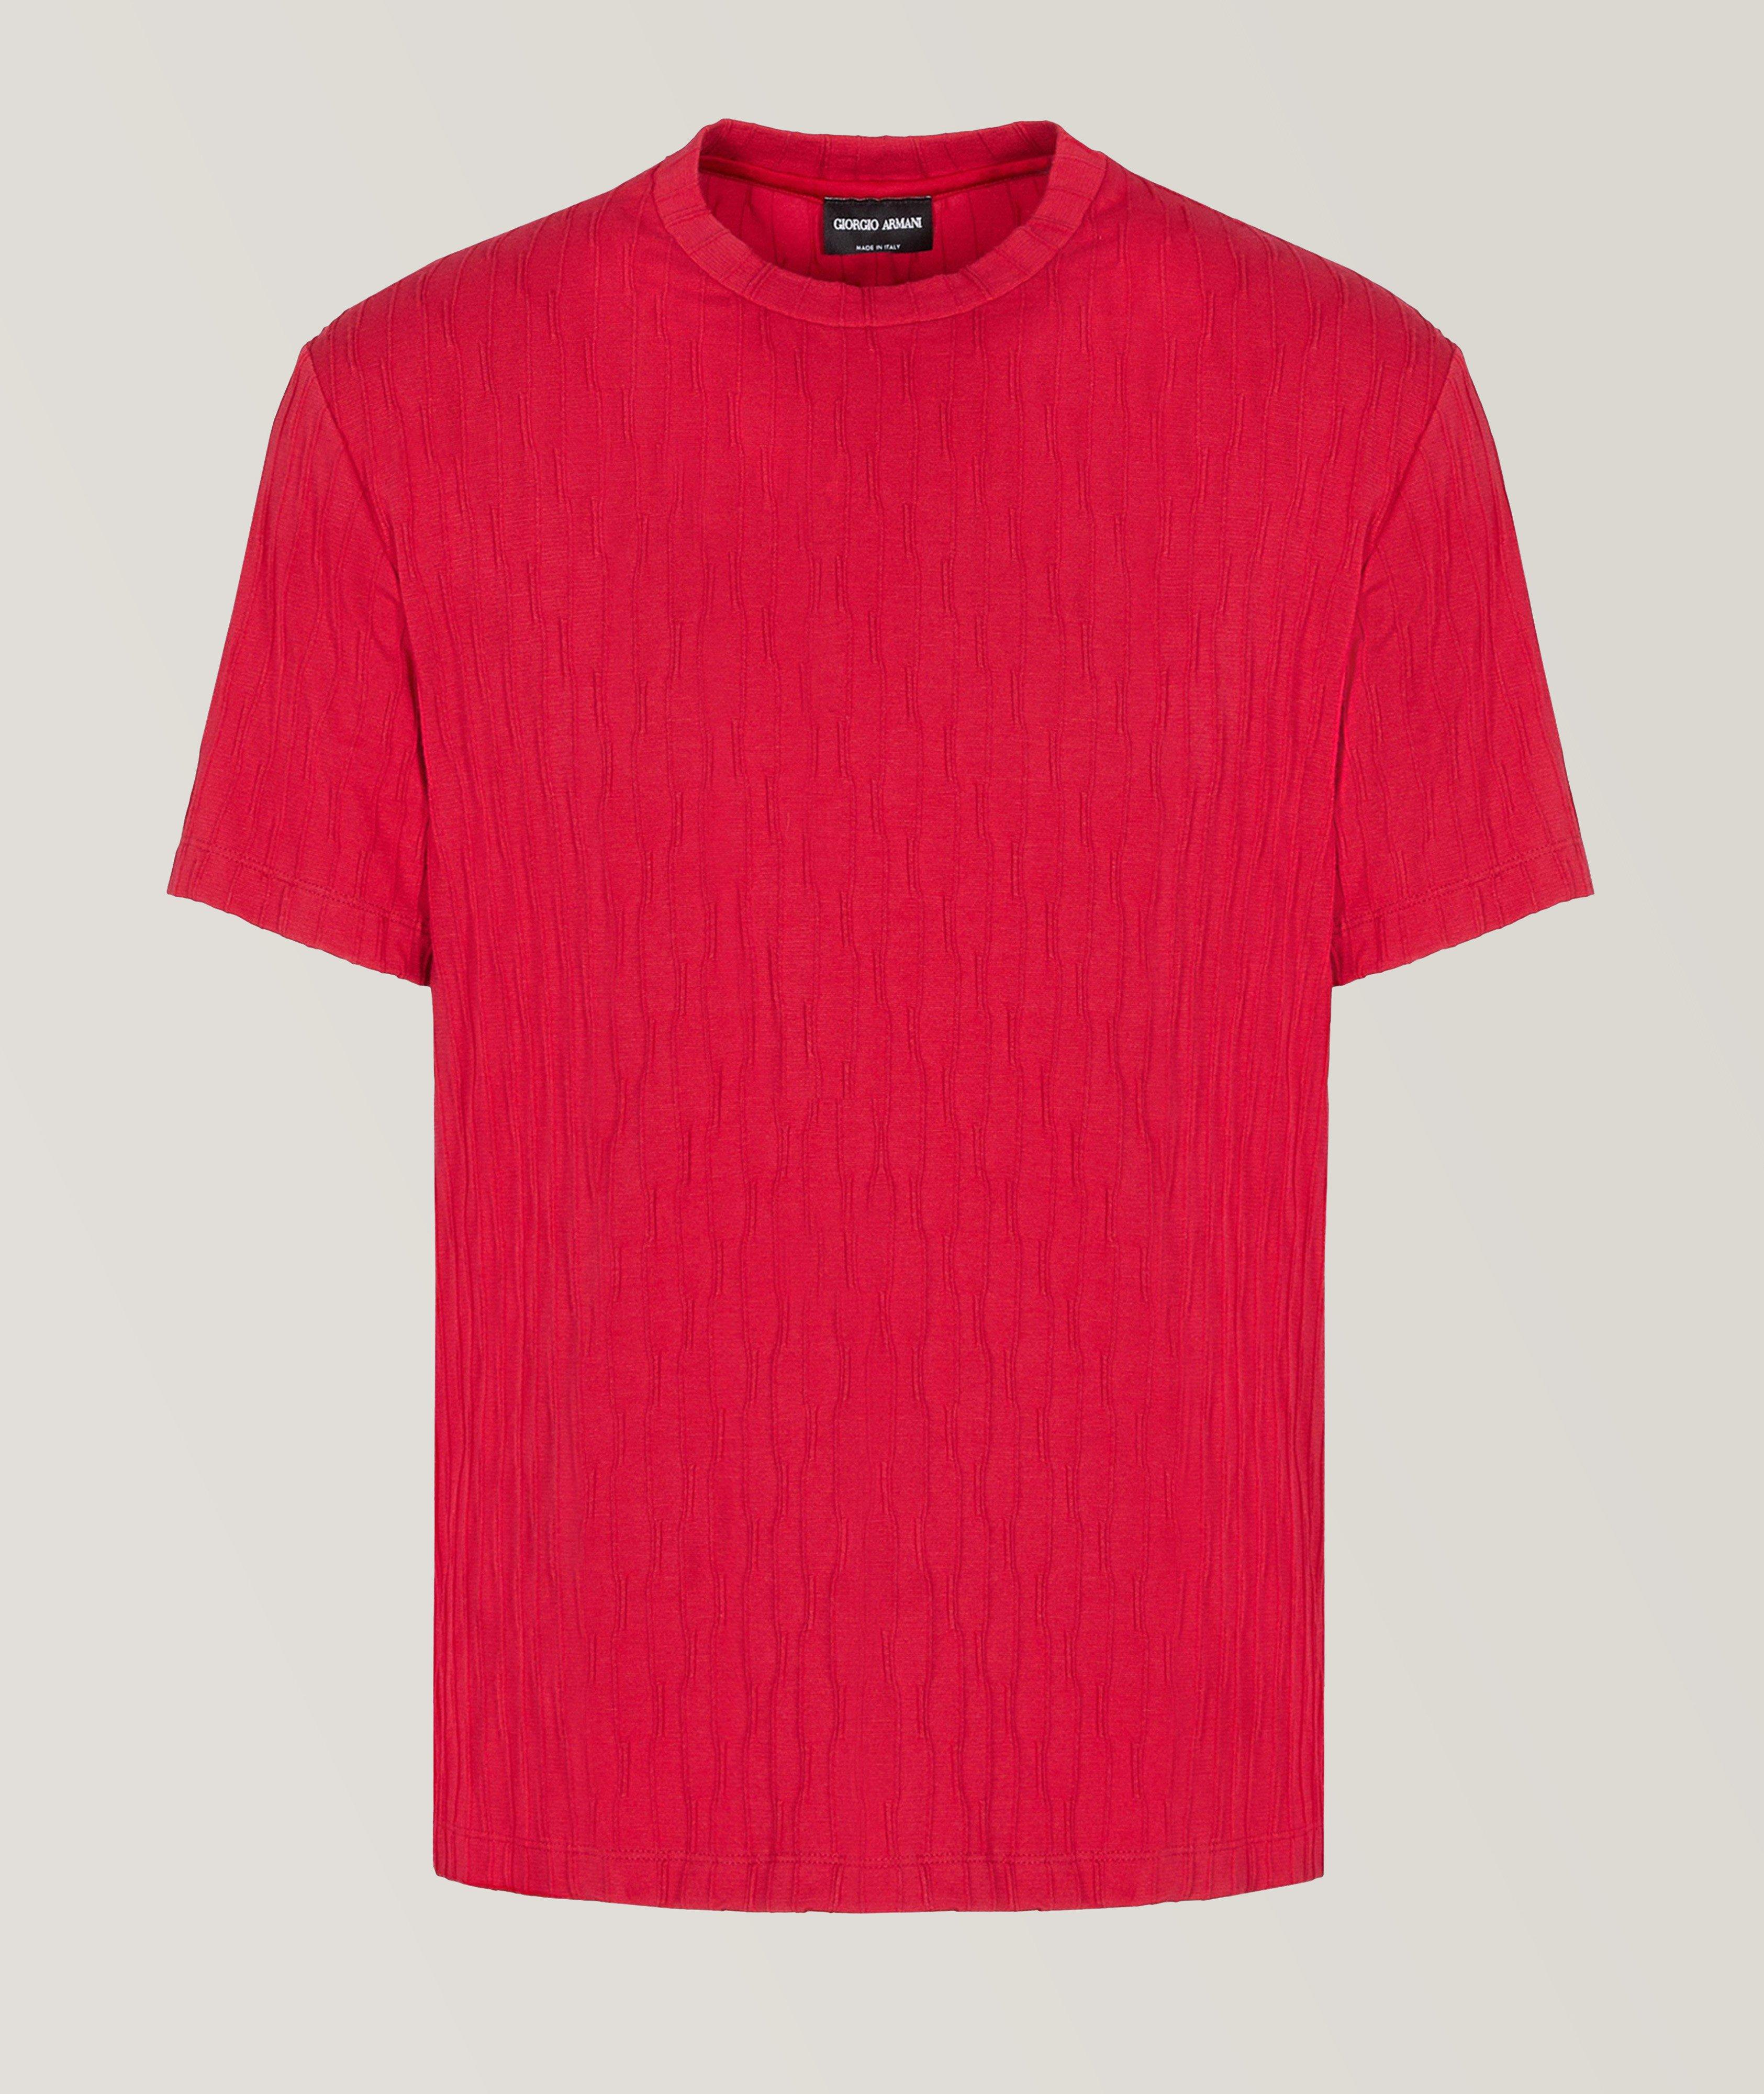 Jersey Stretch-Cashmere T-Shirt image 0